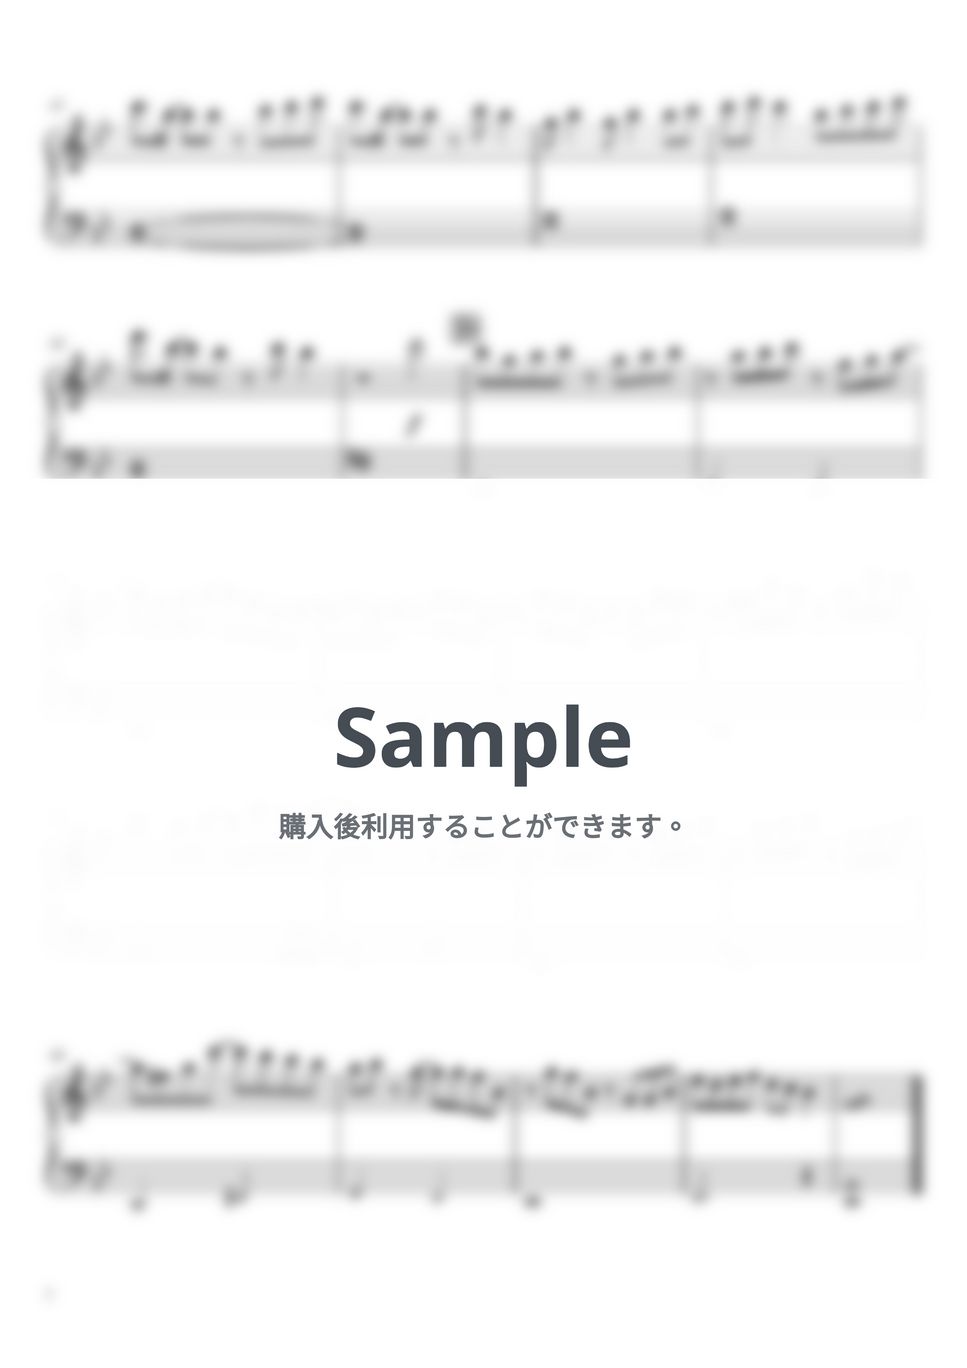 Ayase - 群青 (ピアノ,ソロ,楽譜,弾き語り,群青,YOASOBI,Ayase) by ピアノ猫